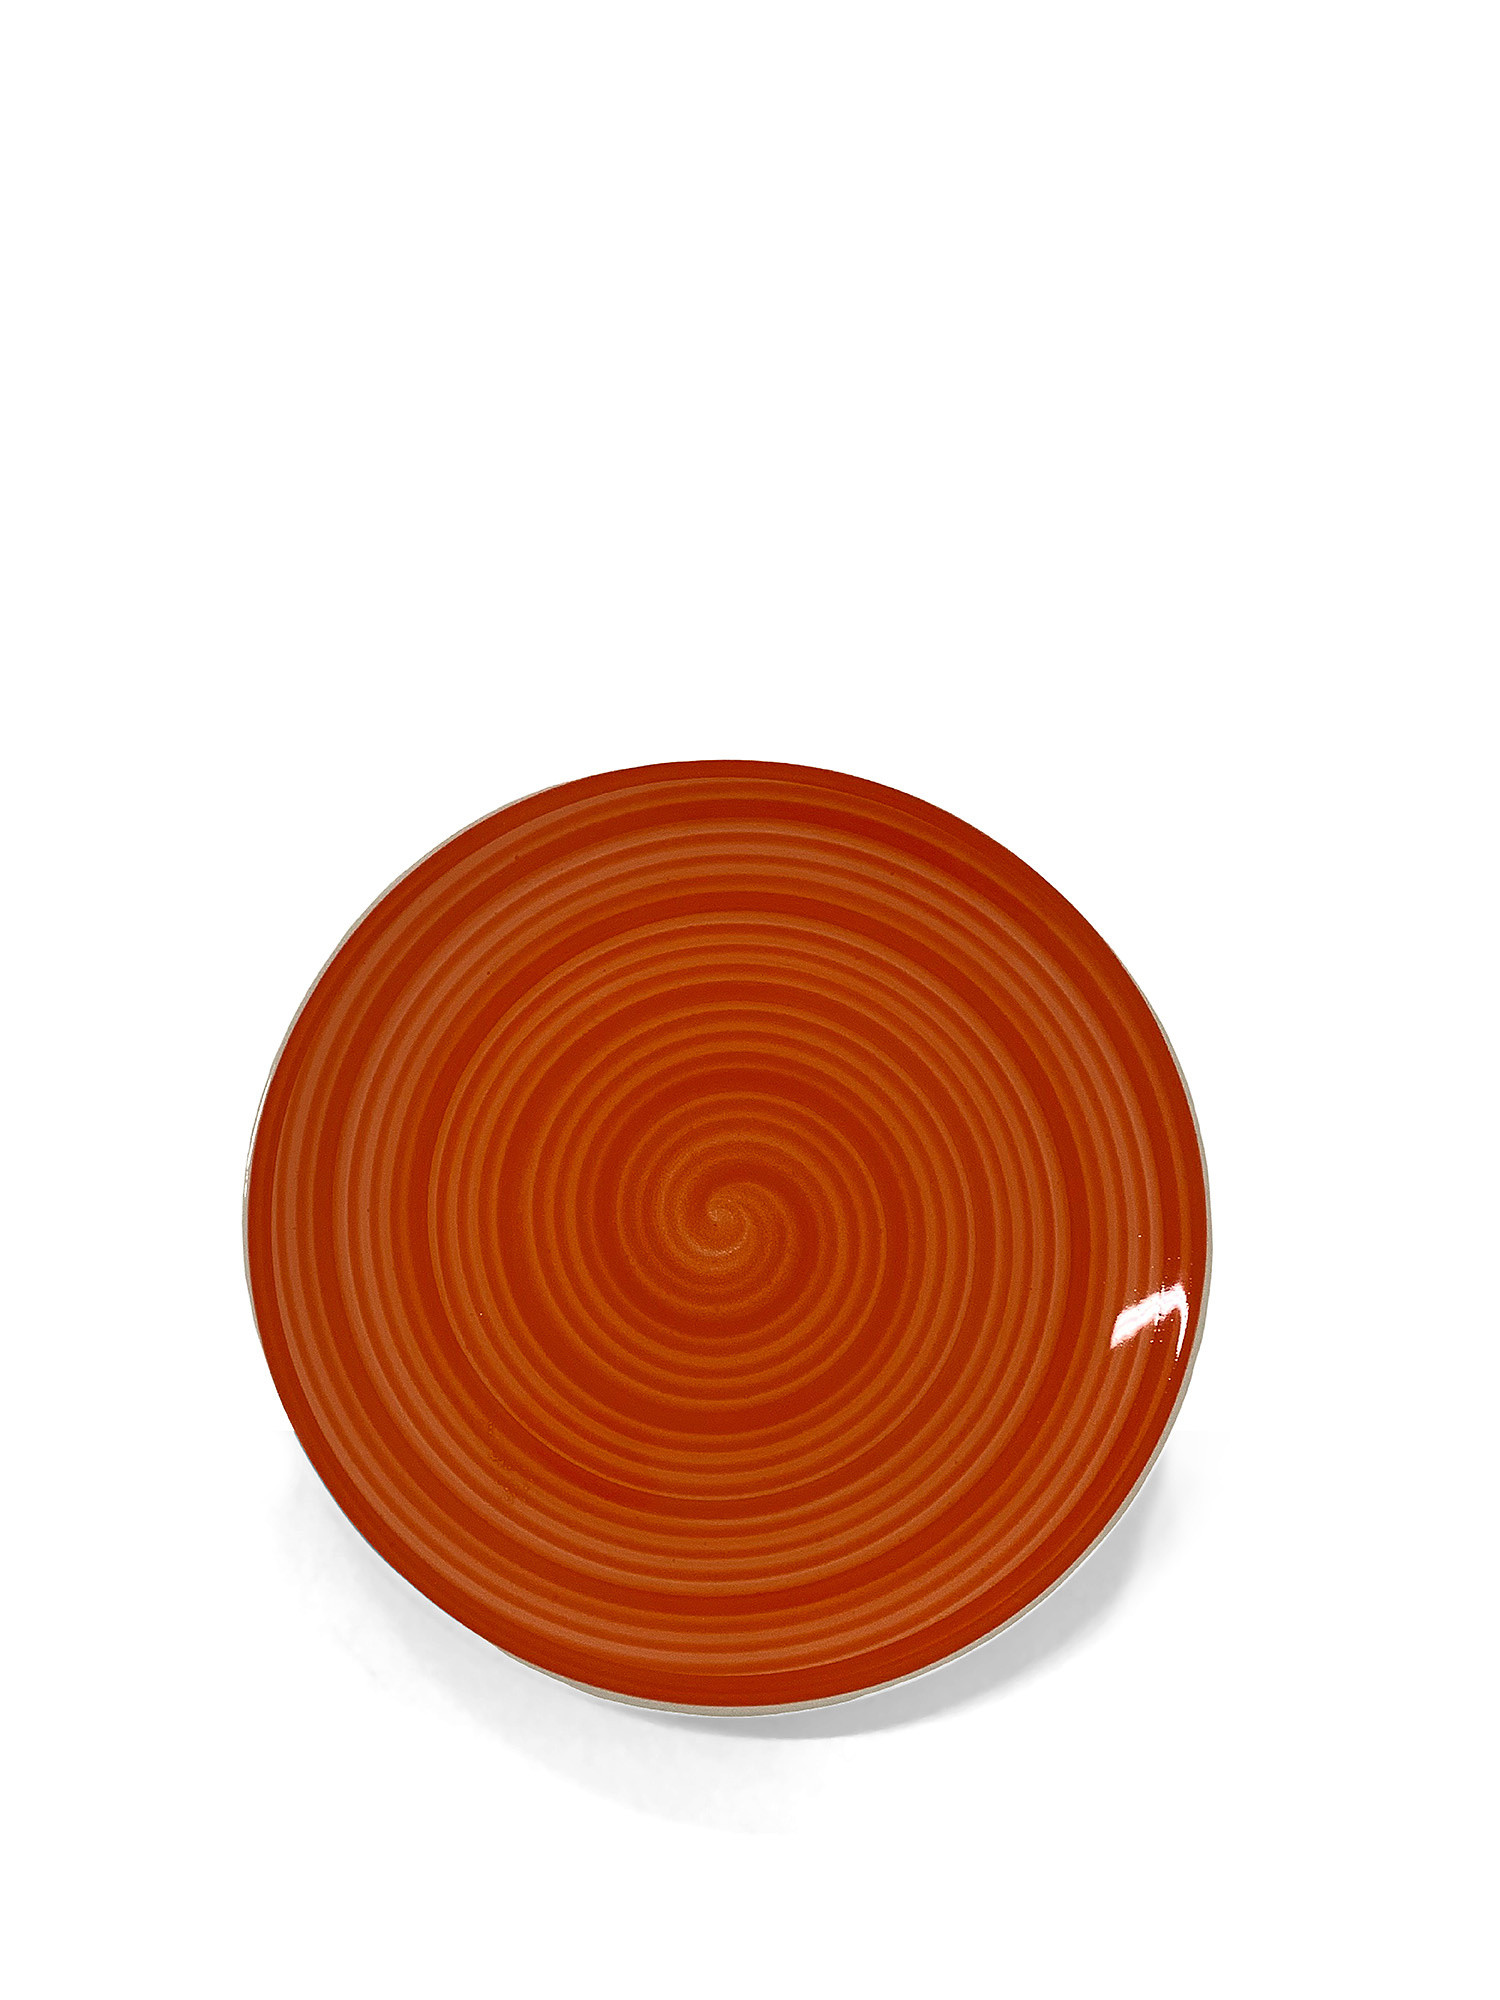 Piatto piano ceramica dipinta a mano Spirale, Arancione, large image number 0